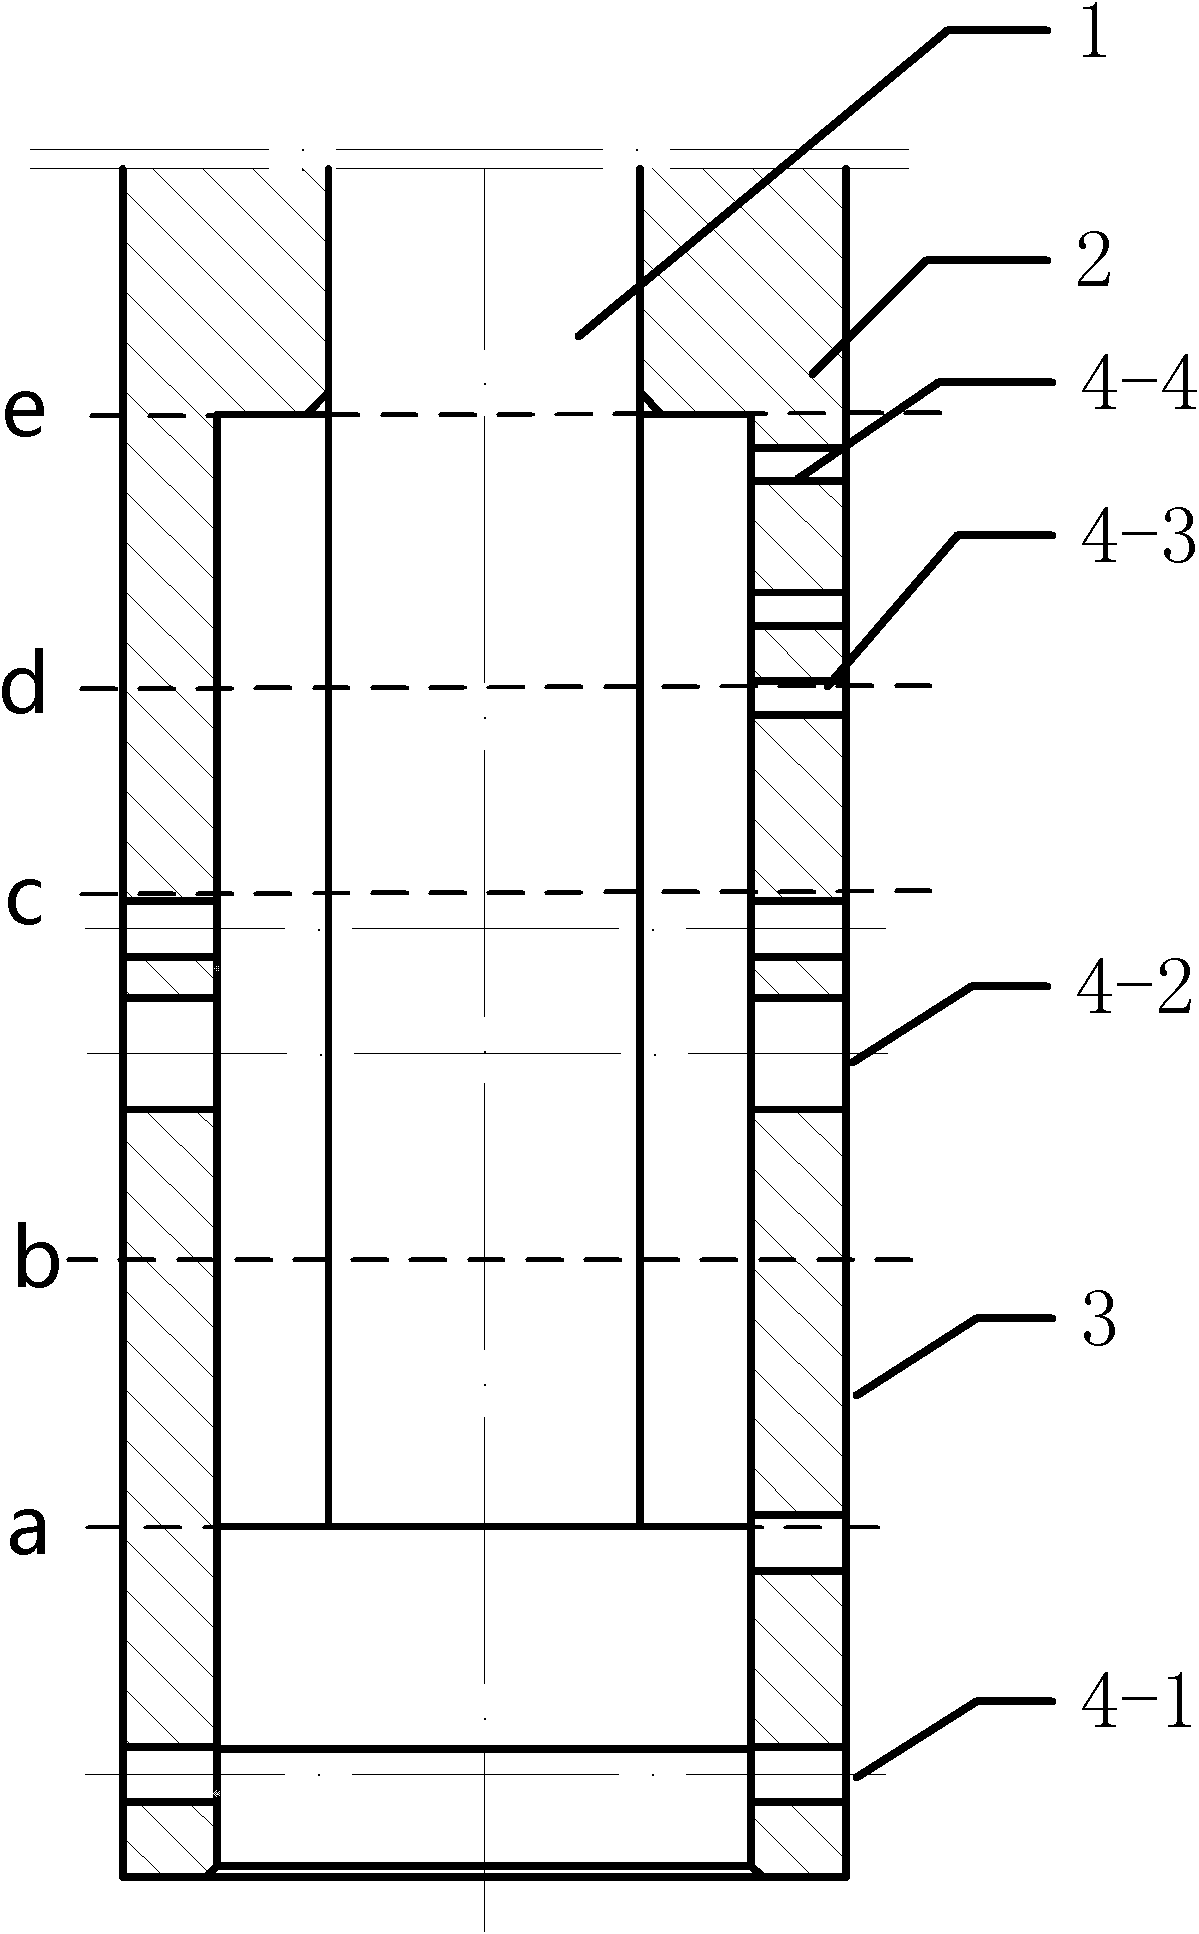 Buffer used for 126kV-vacuum circuit breaker